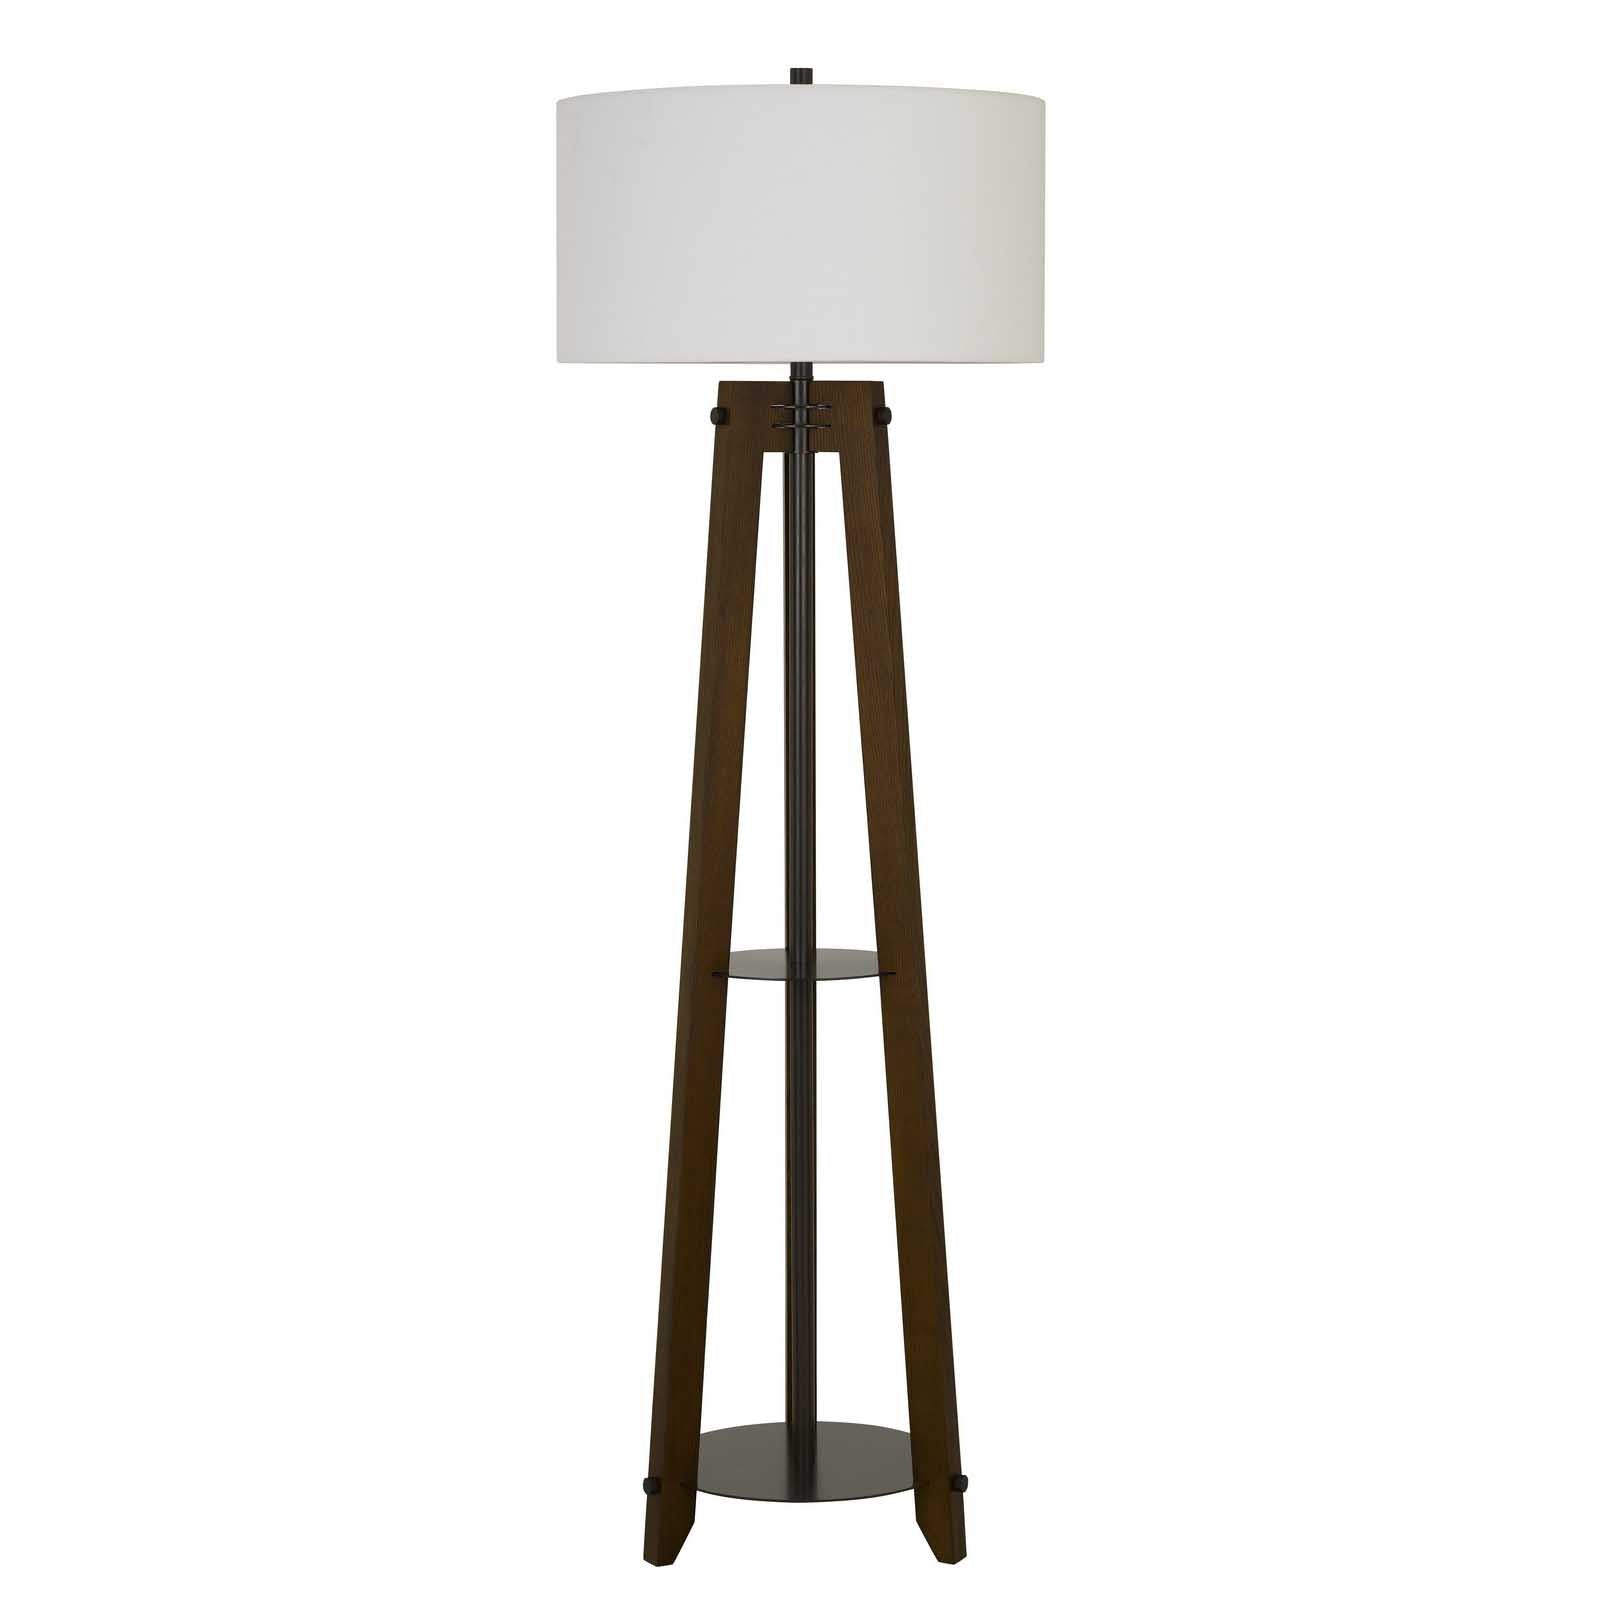 65" Brown Tripod Floor Lamp With White Rectangular Shade